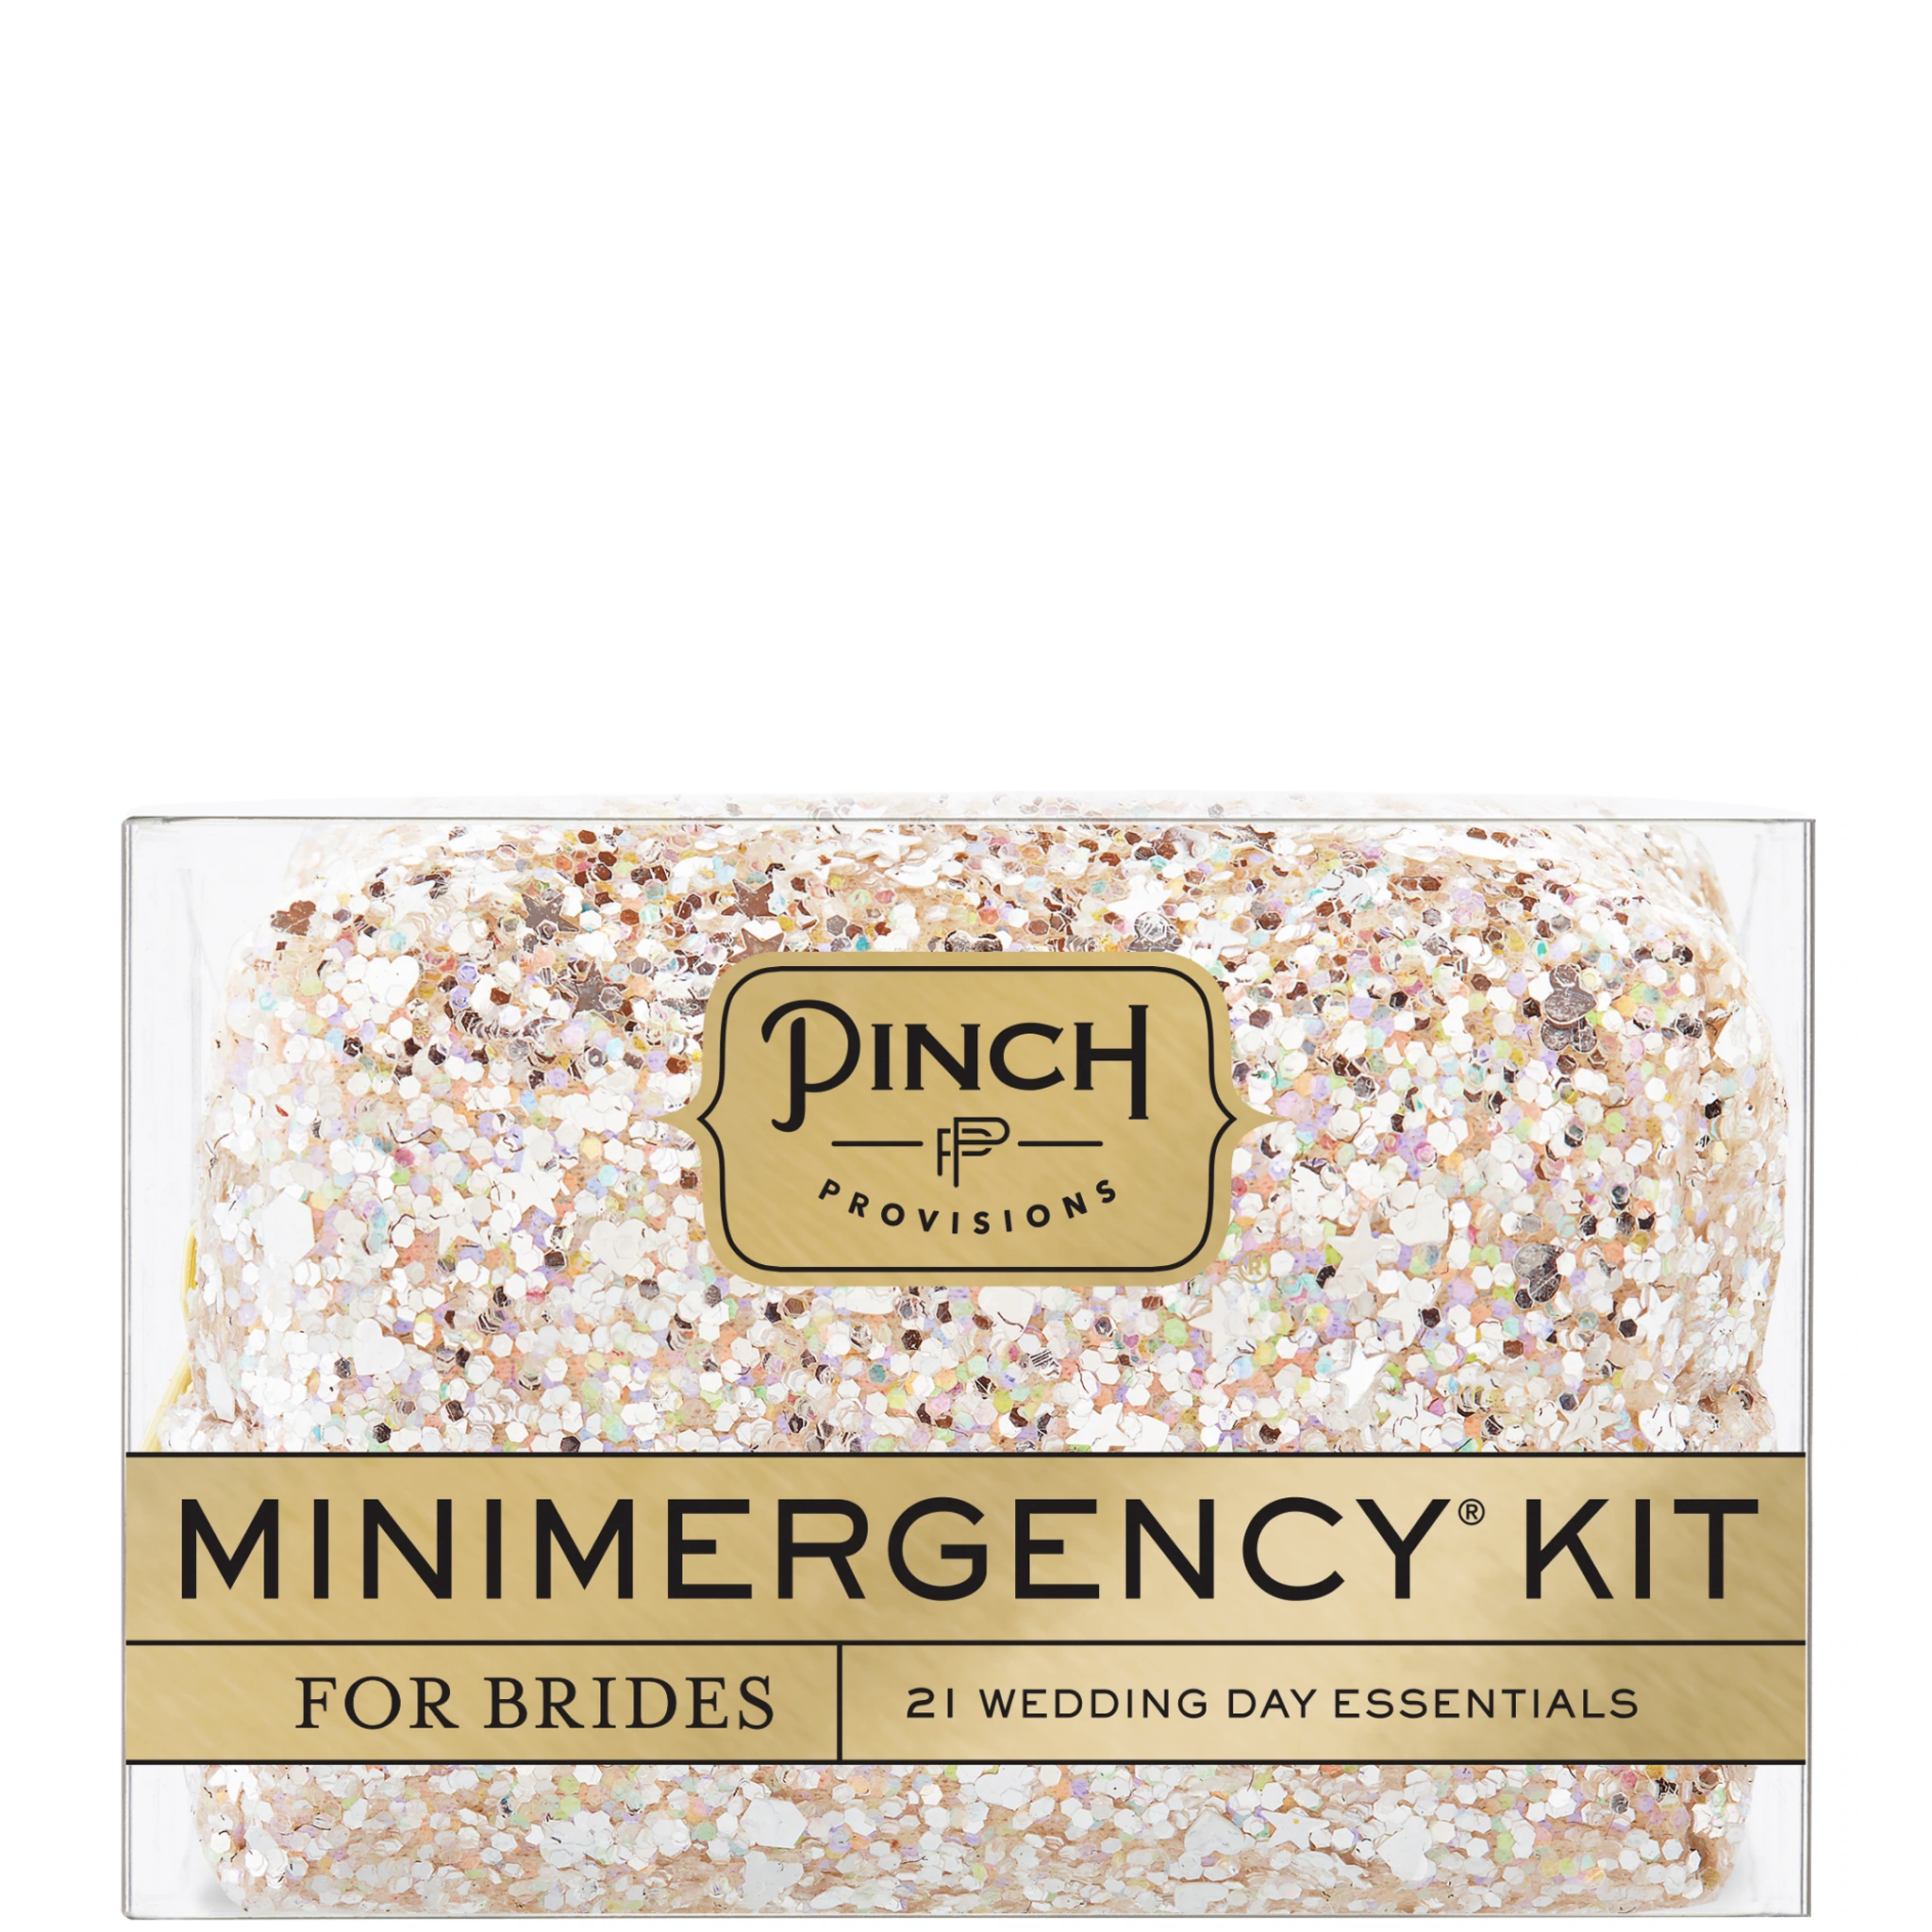 Minimergency Kit for brides